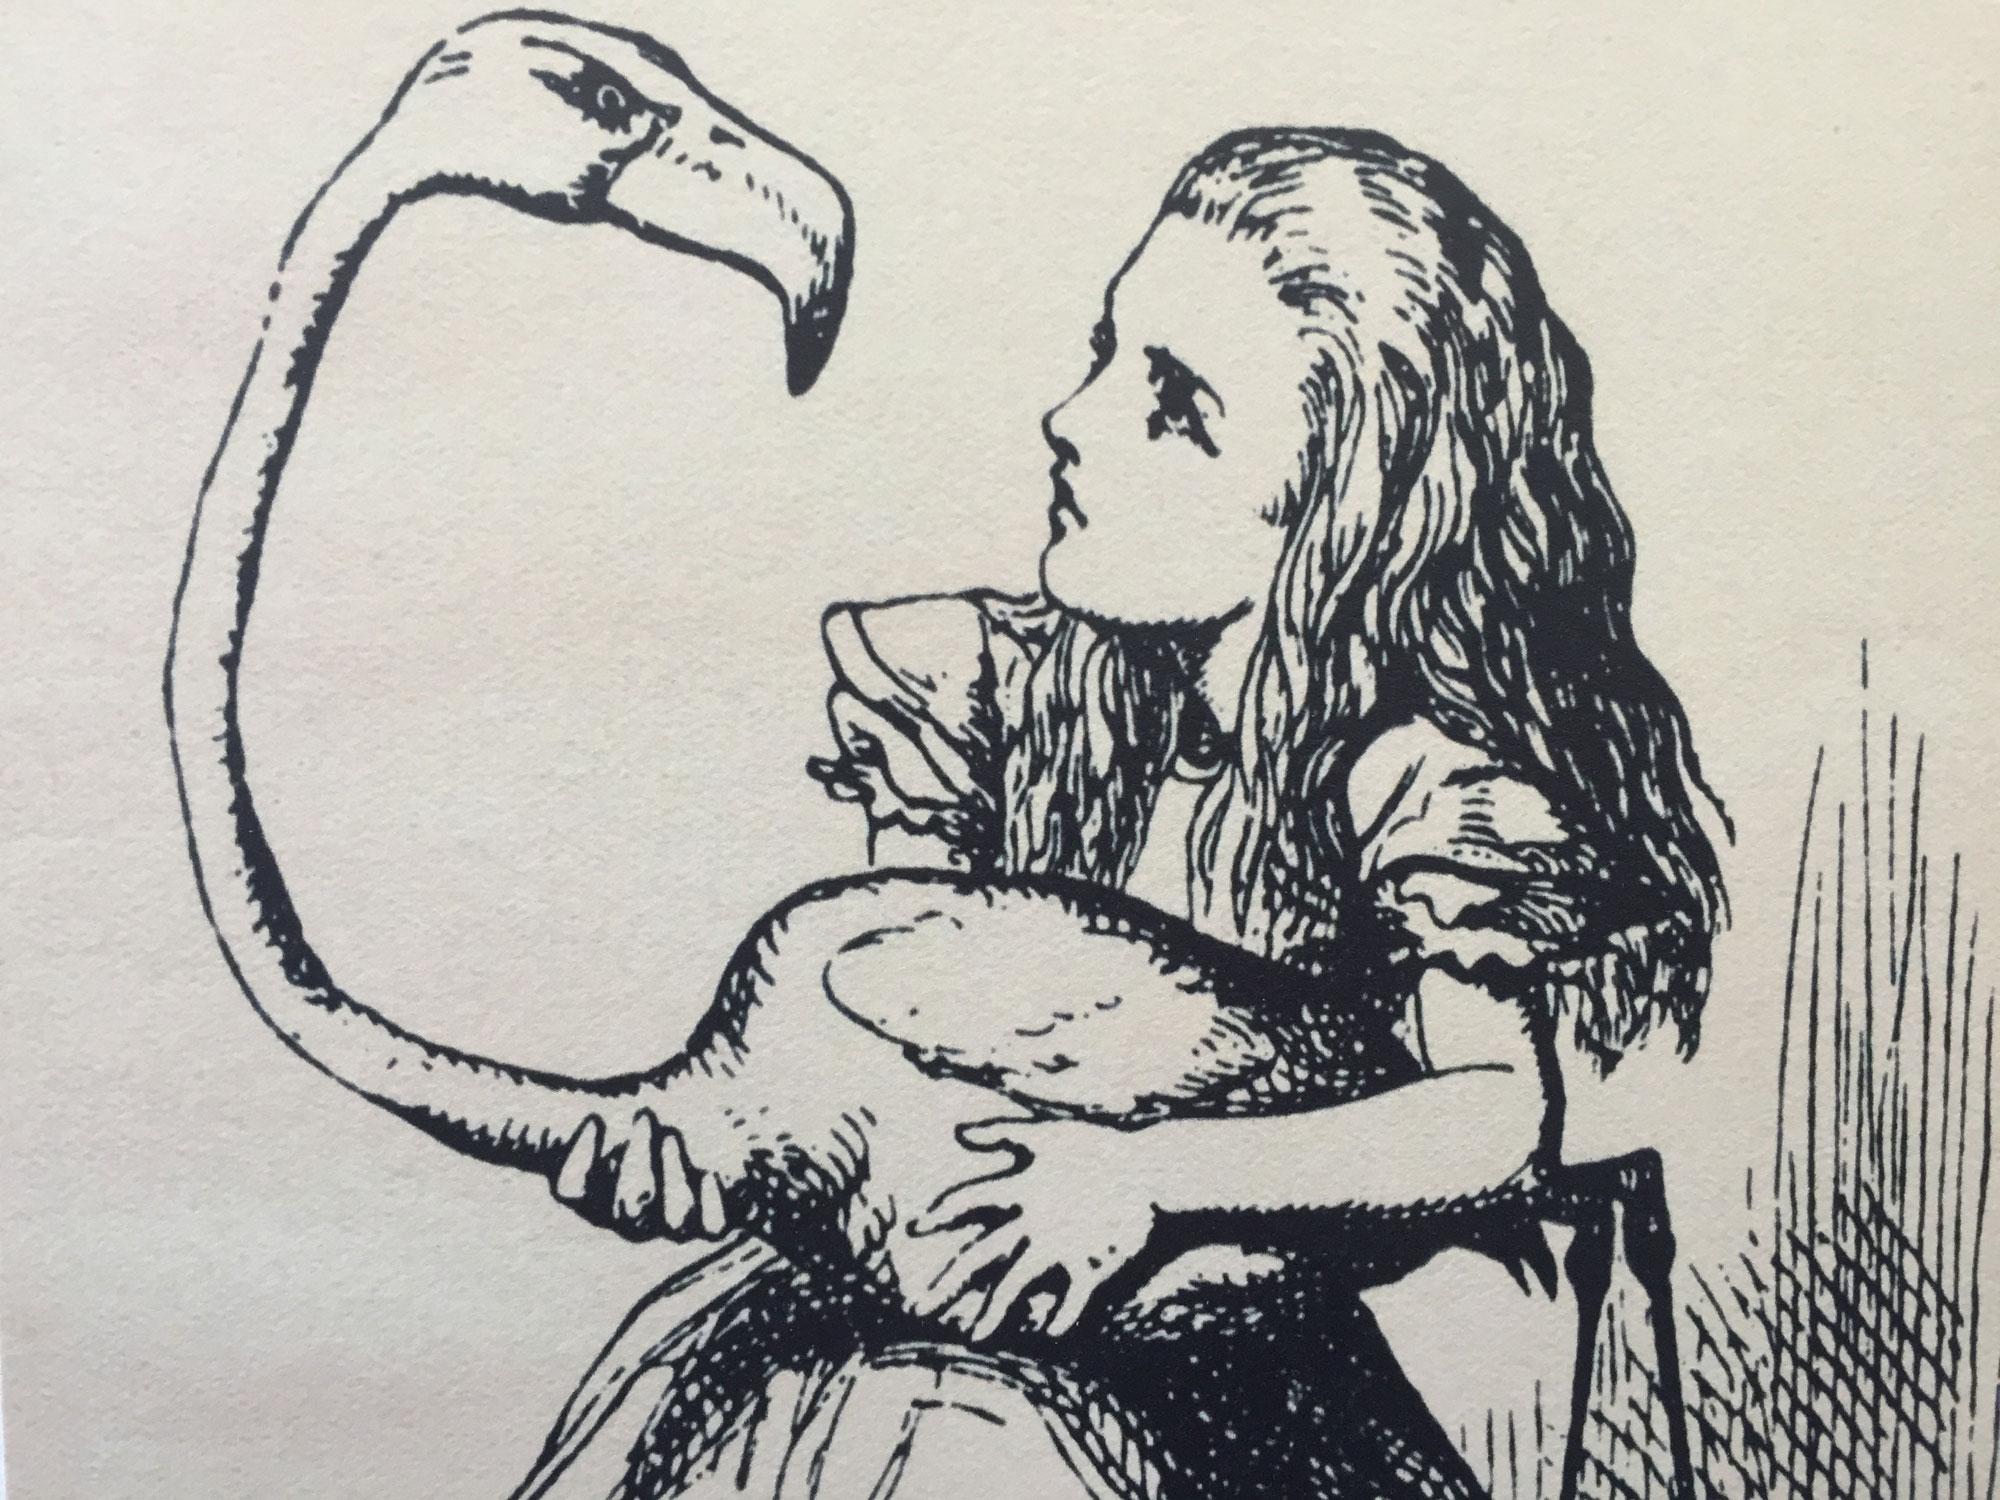 Reproduction de l'illustration d'Alice par John Tenniel, Grande-Bretagne, 1865. [RTS - Lara Donnet]